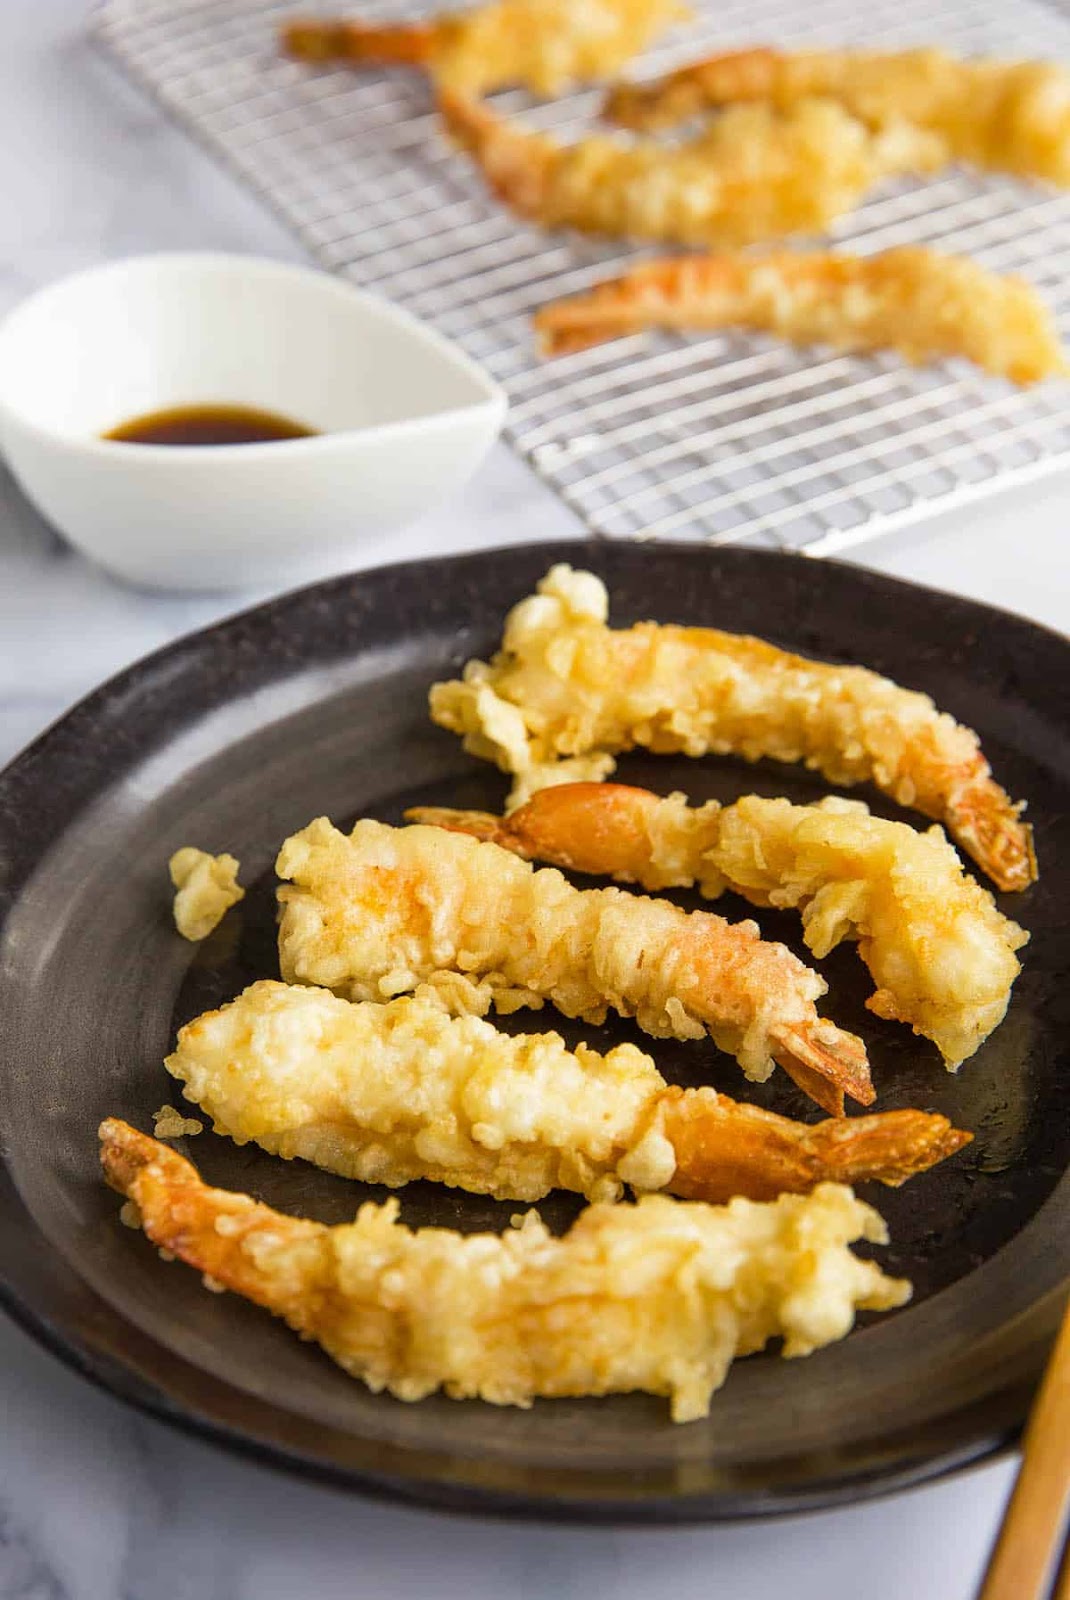 Ebi tempura served with dipping sauce.